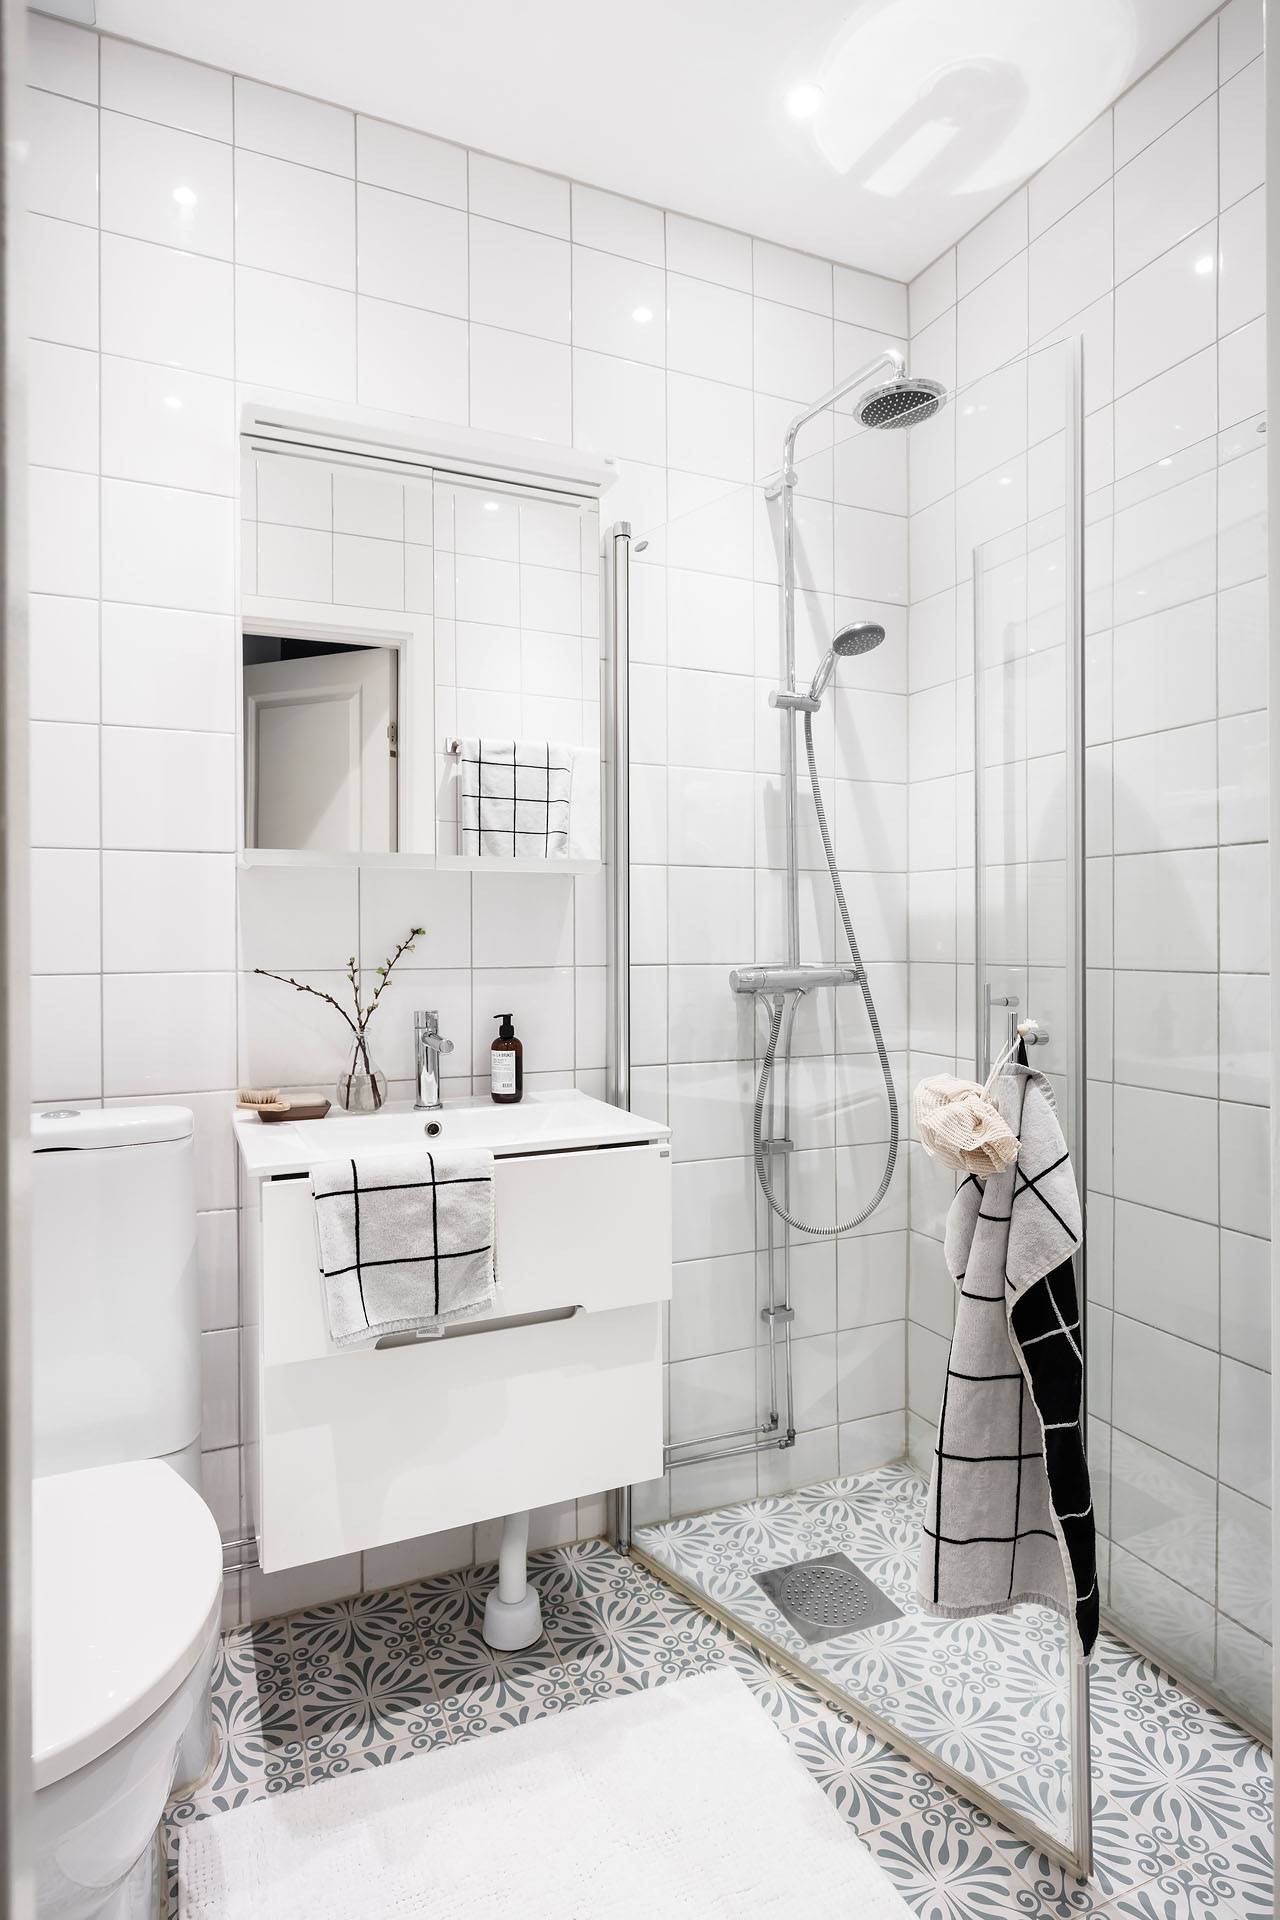 Baño con ducha de estilo nórdico en color blanco, foto de Alvhem